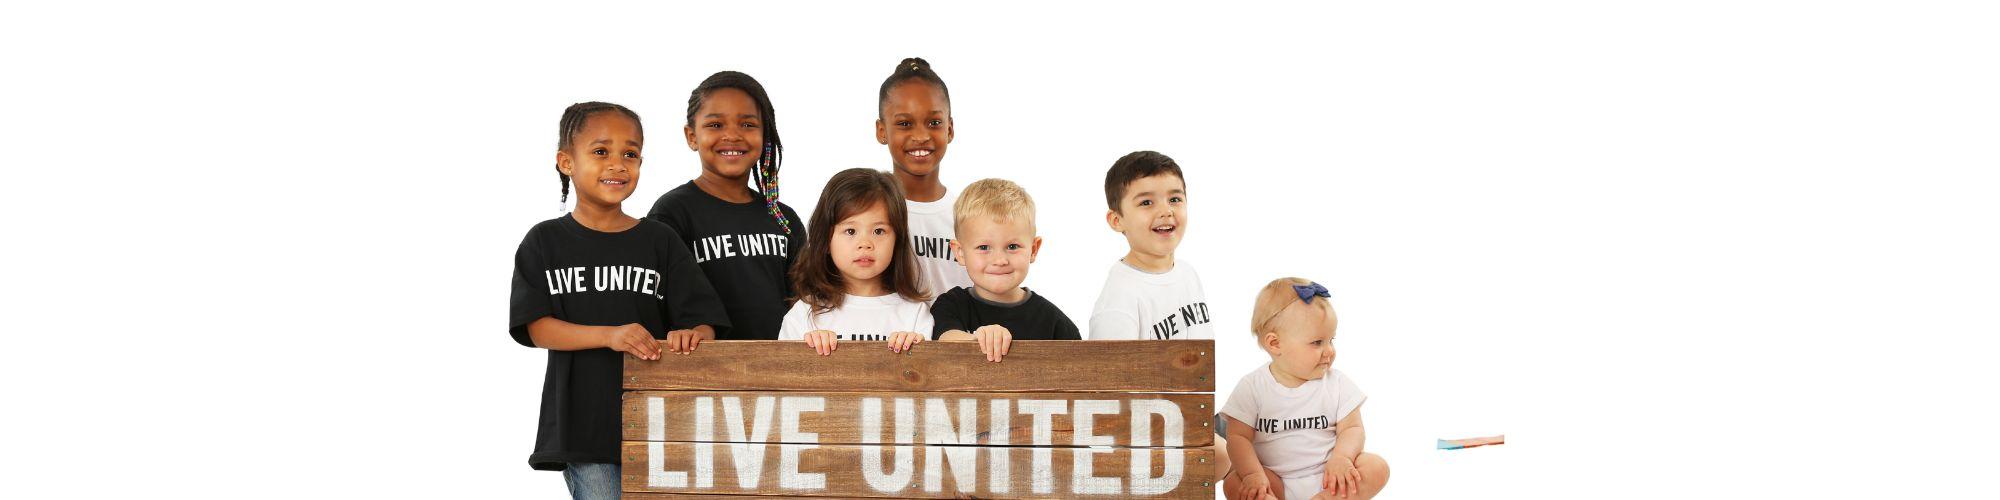 Children in LIVE UNITED shirts